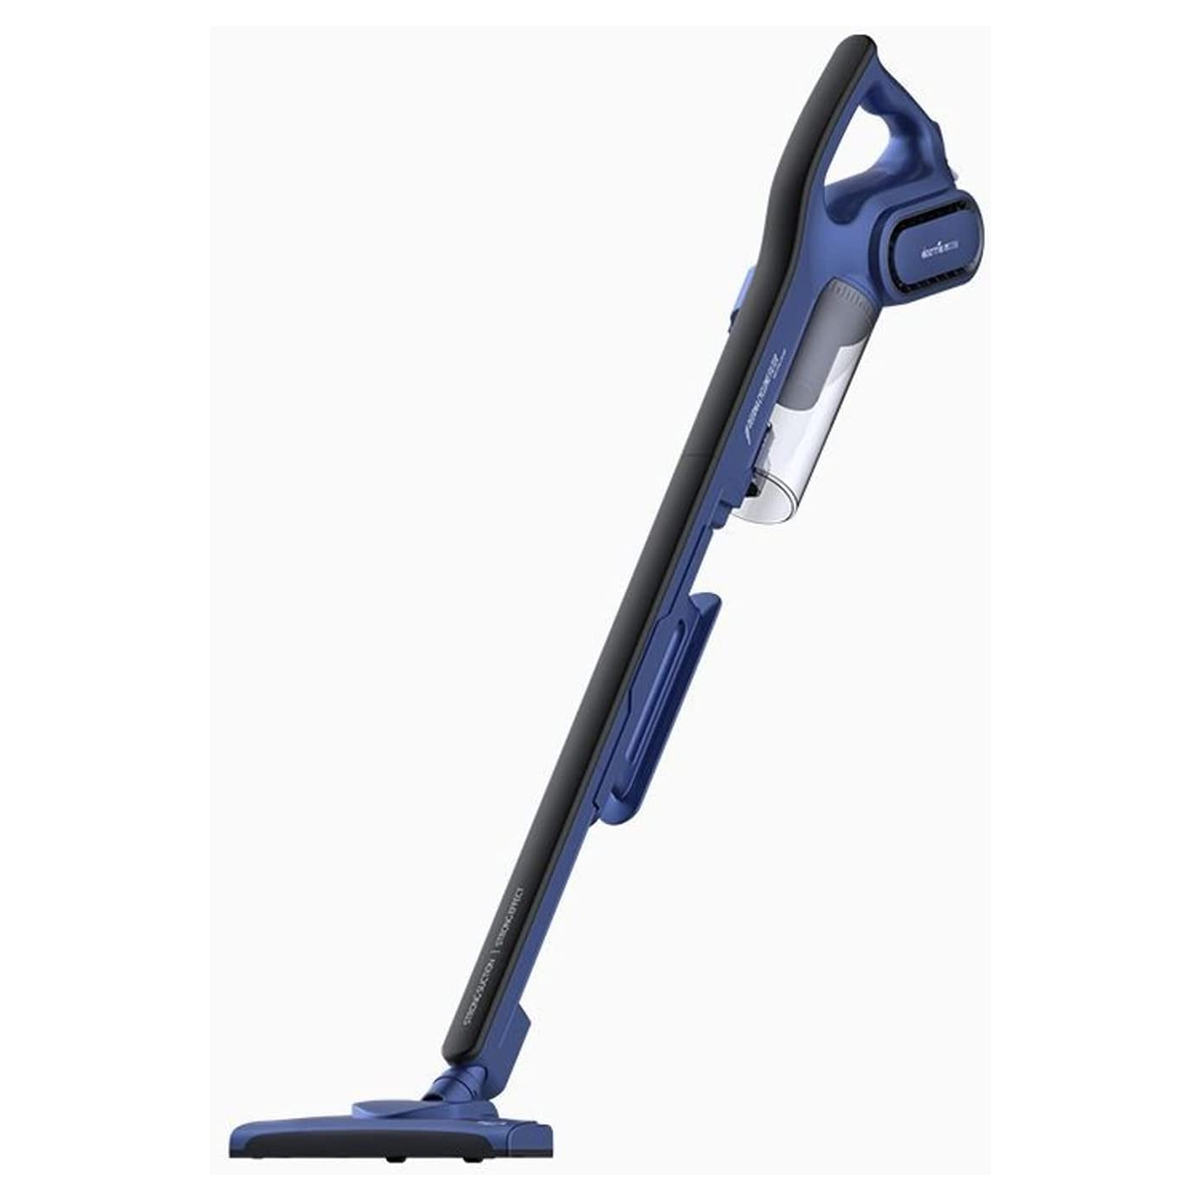 Deerma DX810 Handheld Vacuum Cleaner 16000 Pa Strong Suction Power - Blue